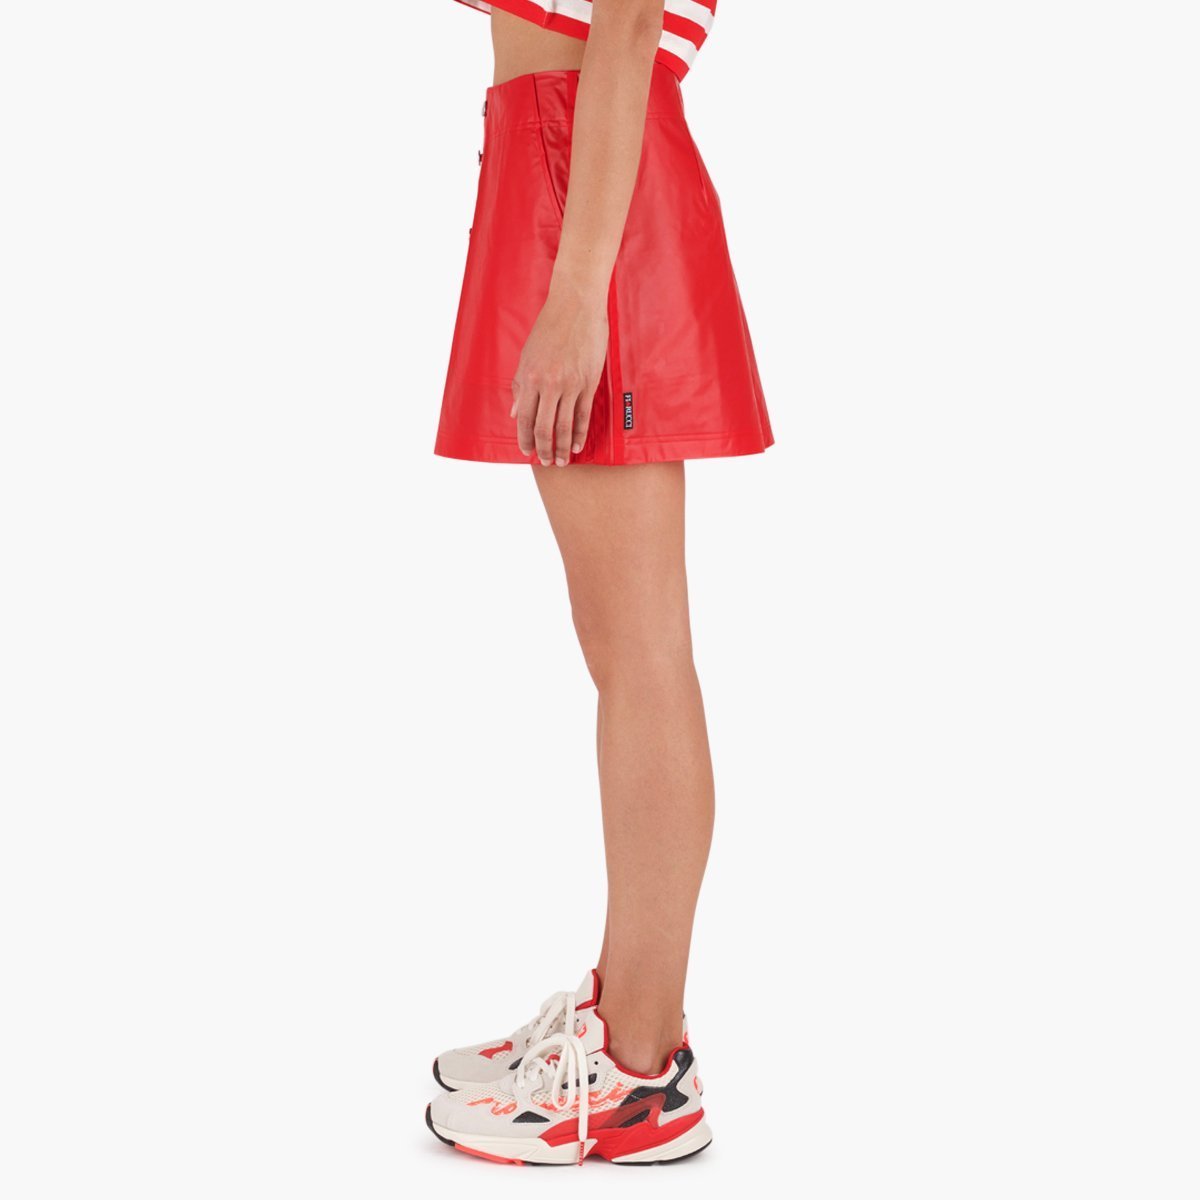 gebouw Thuisland Grondig adidas Originals FIORUCCI Kiss Mini Skirt now at SUEDE Store – SUEDE Store